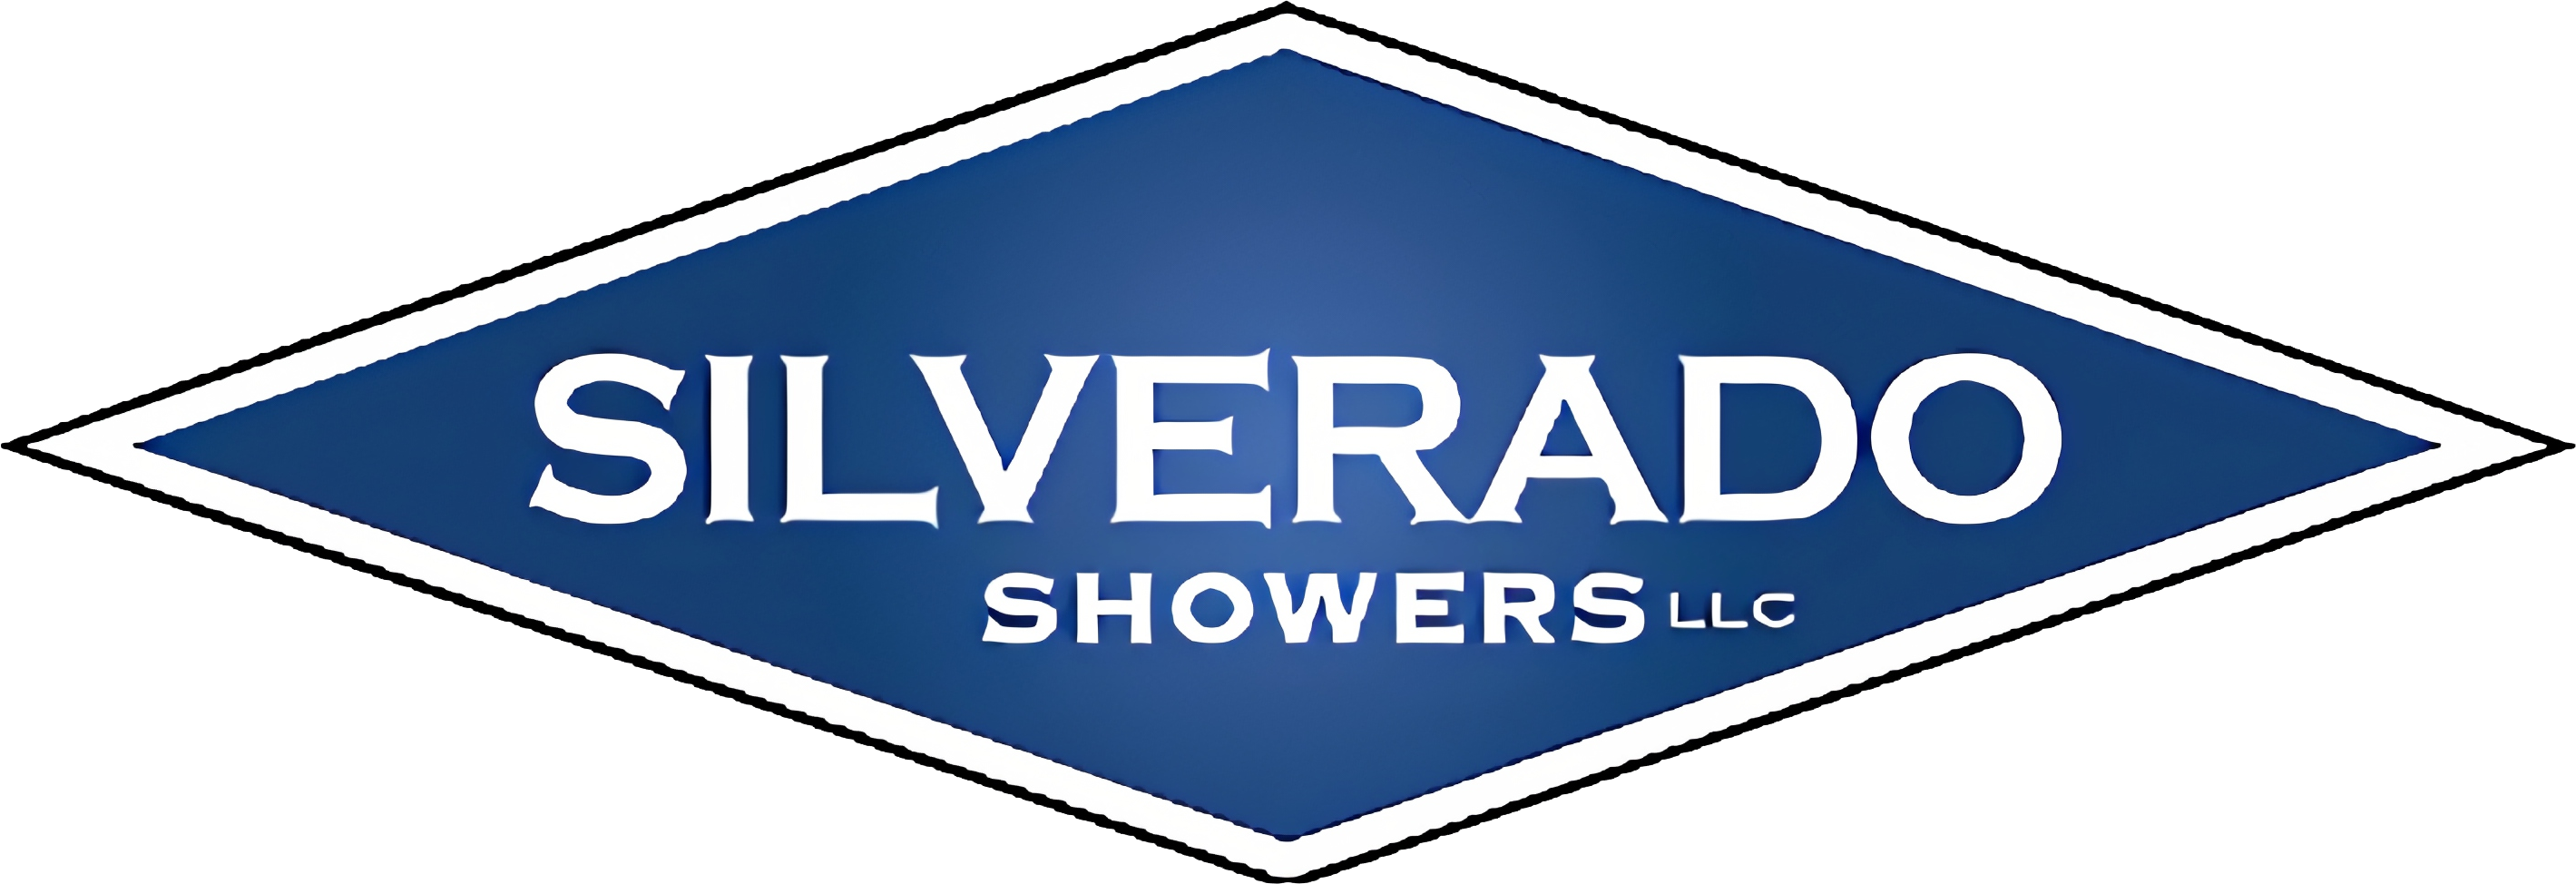 silverado-showers-logo-(1)